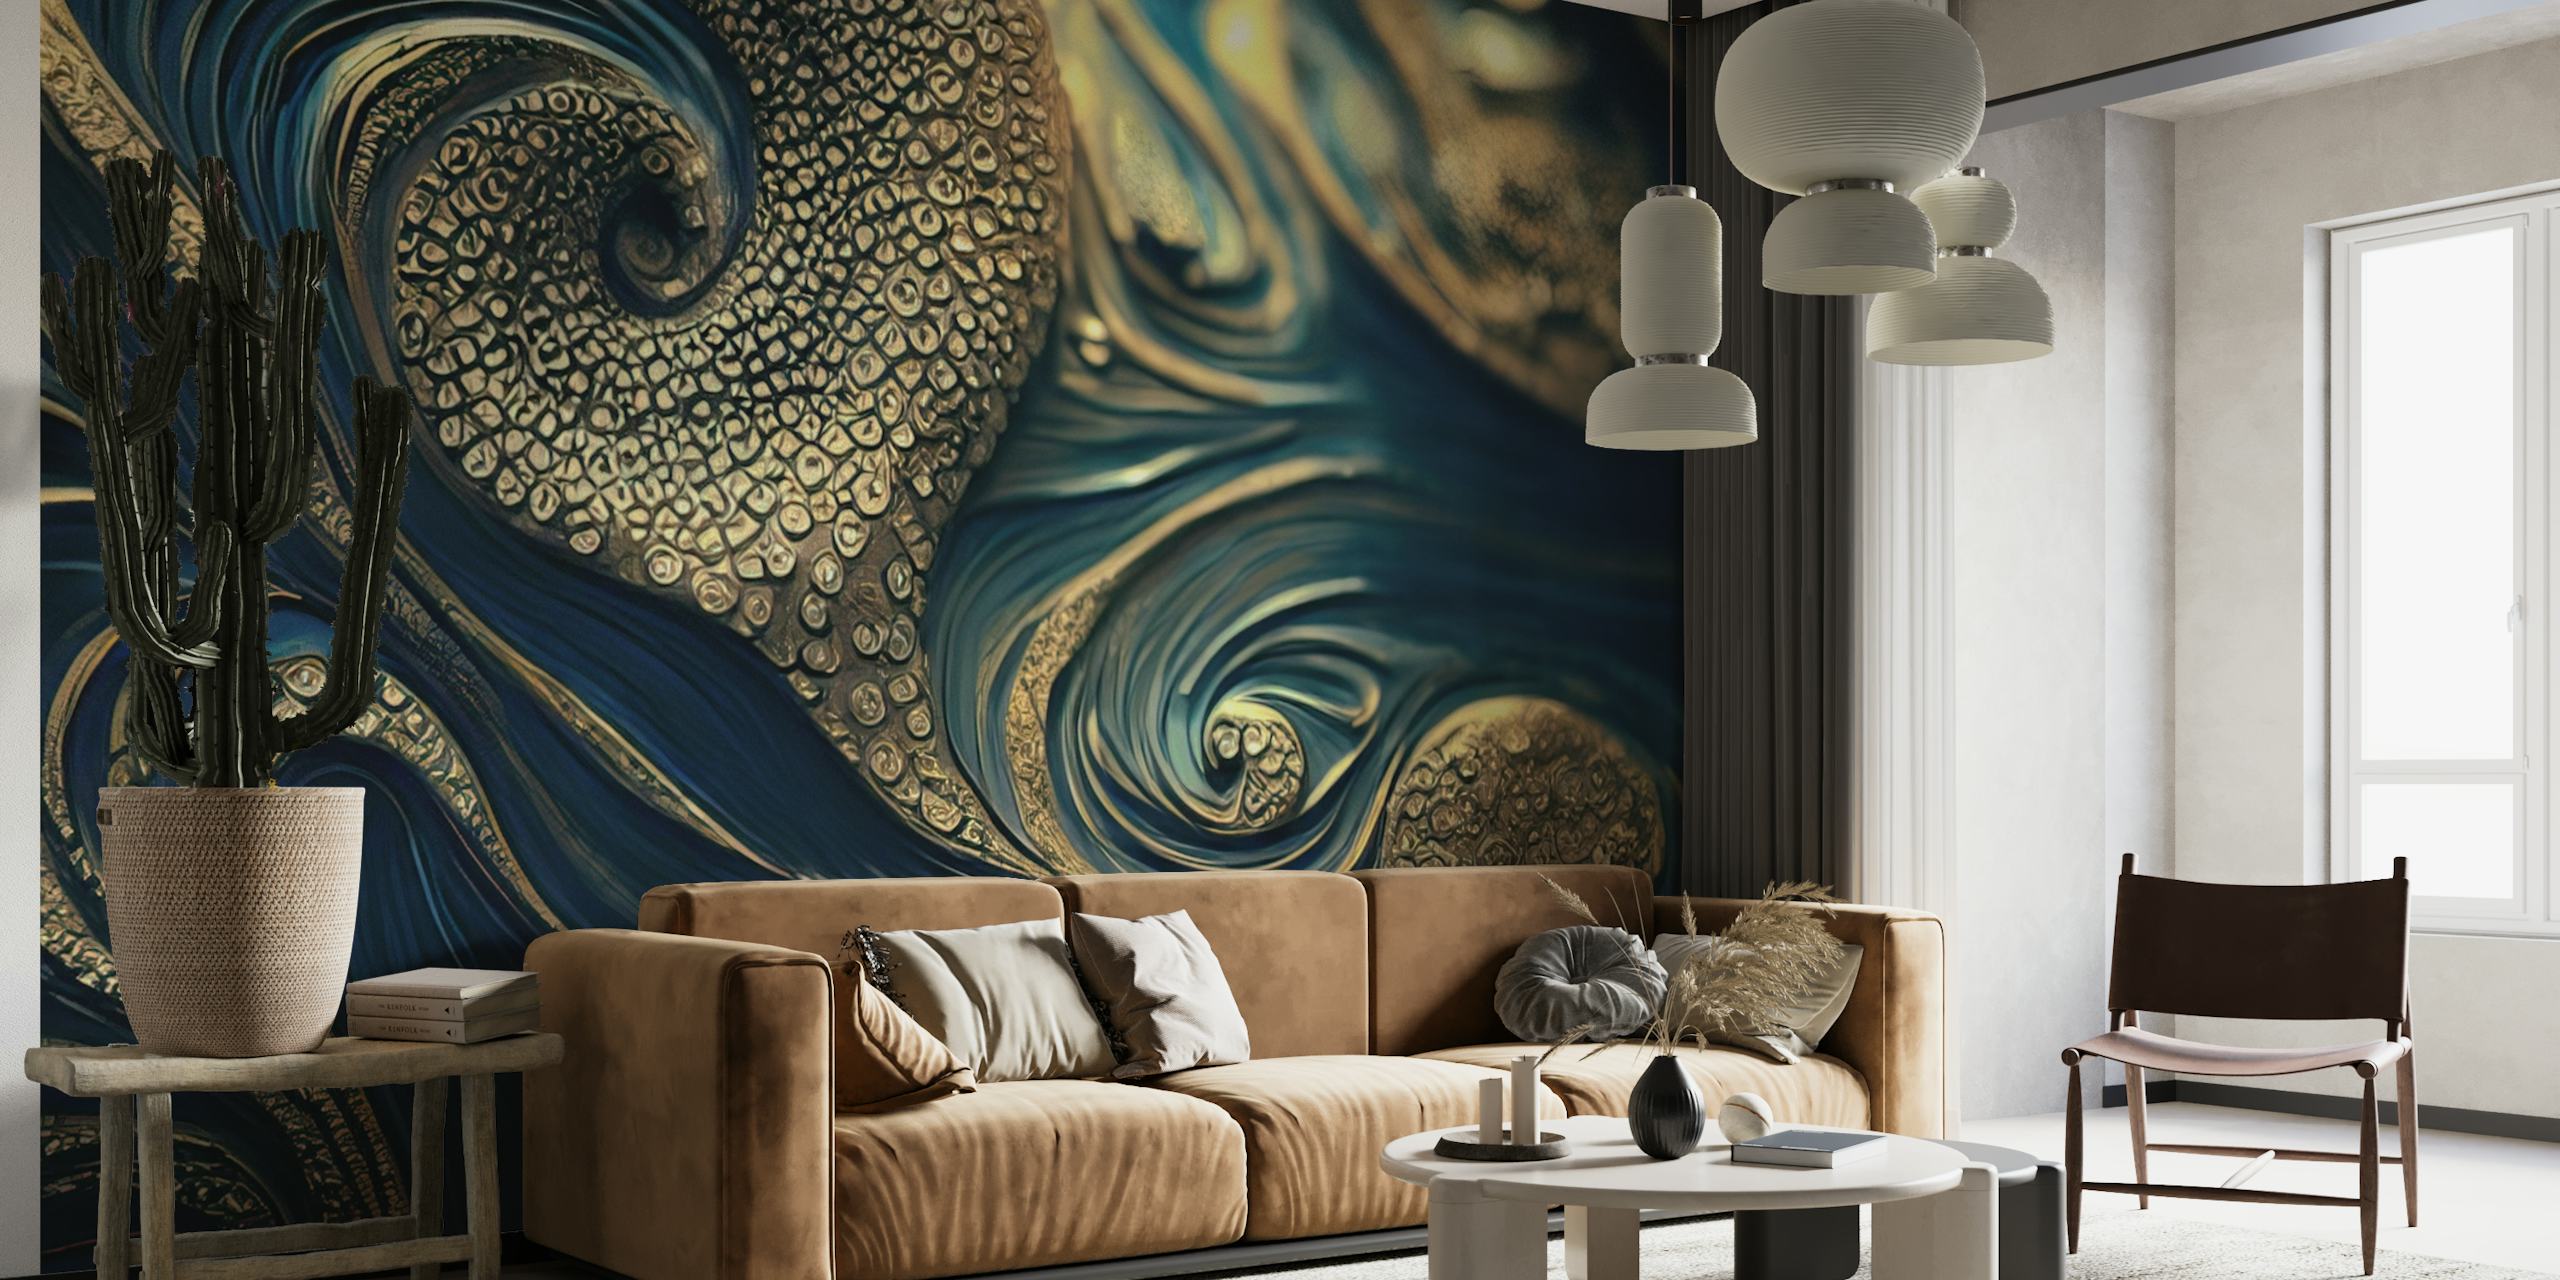 Octopus abstrakt vægmaleri med hvirvlende blå mønstre og gyldne accenter